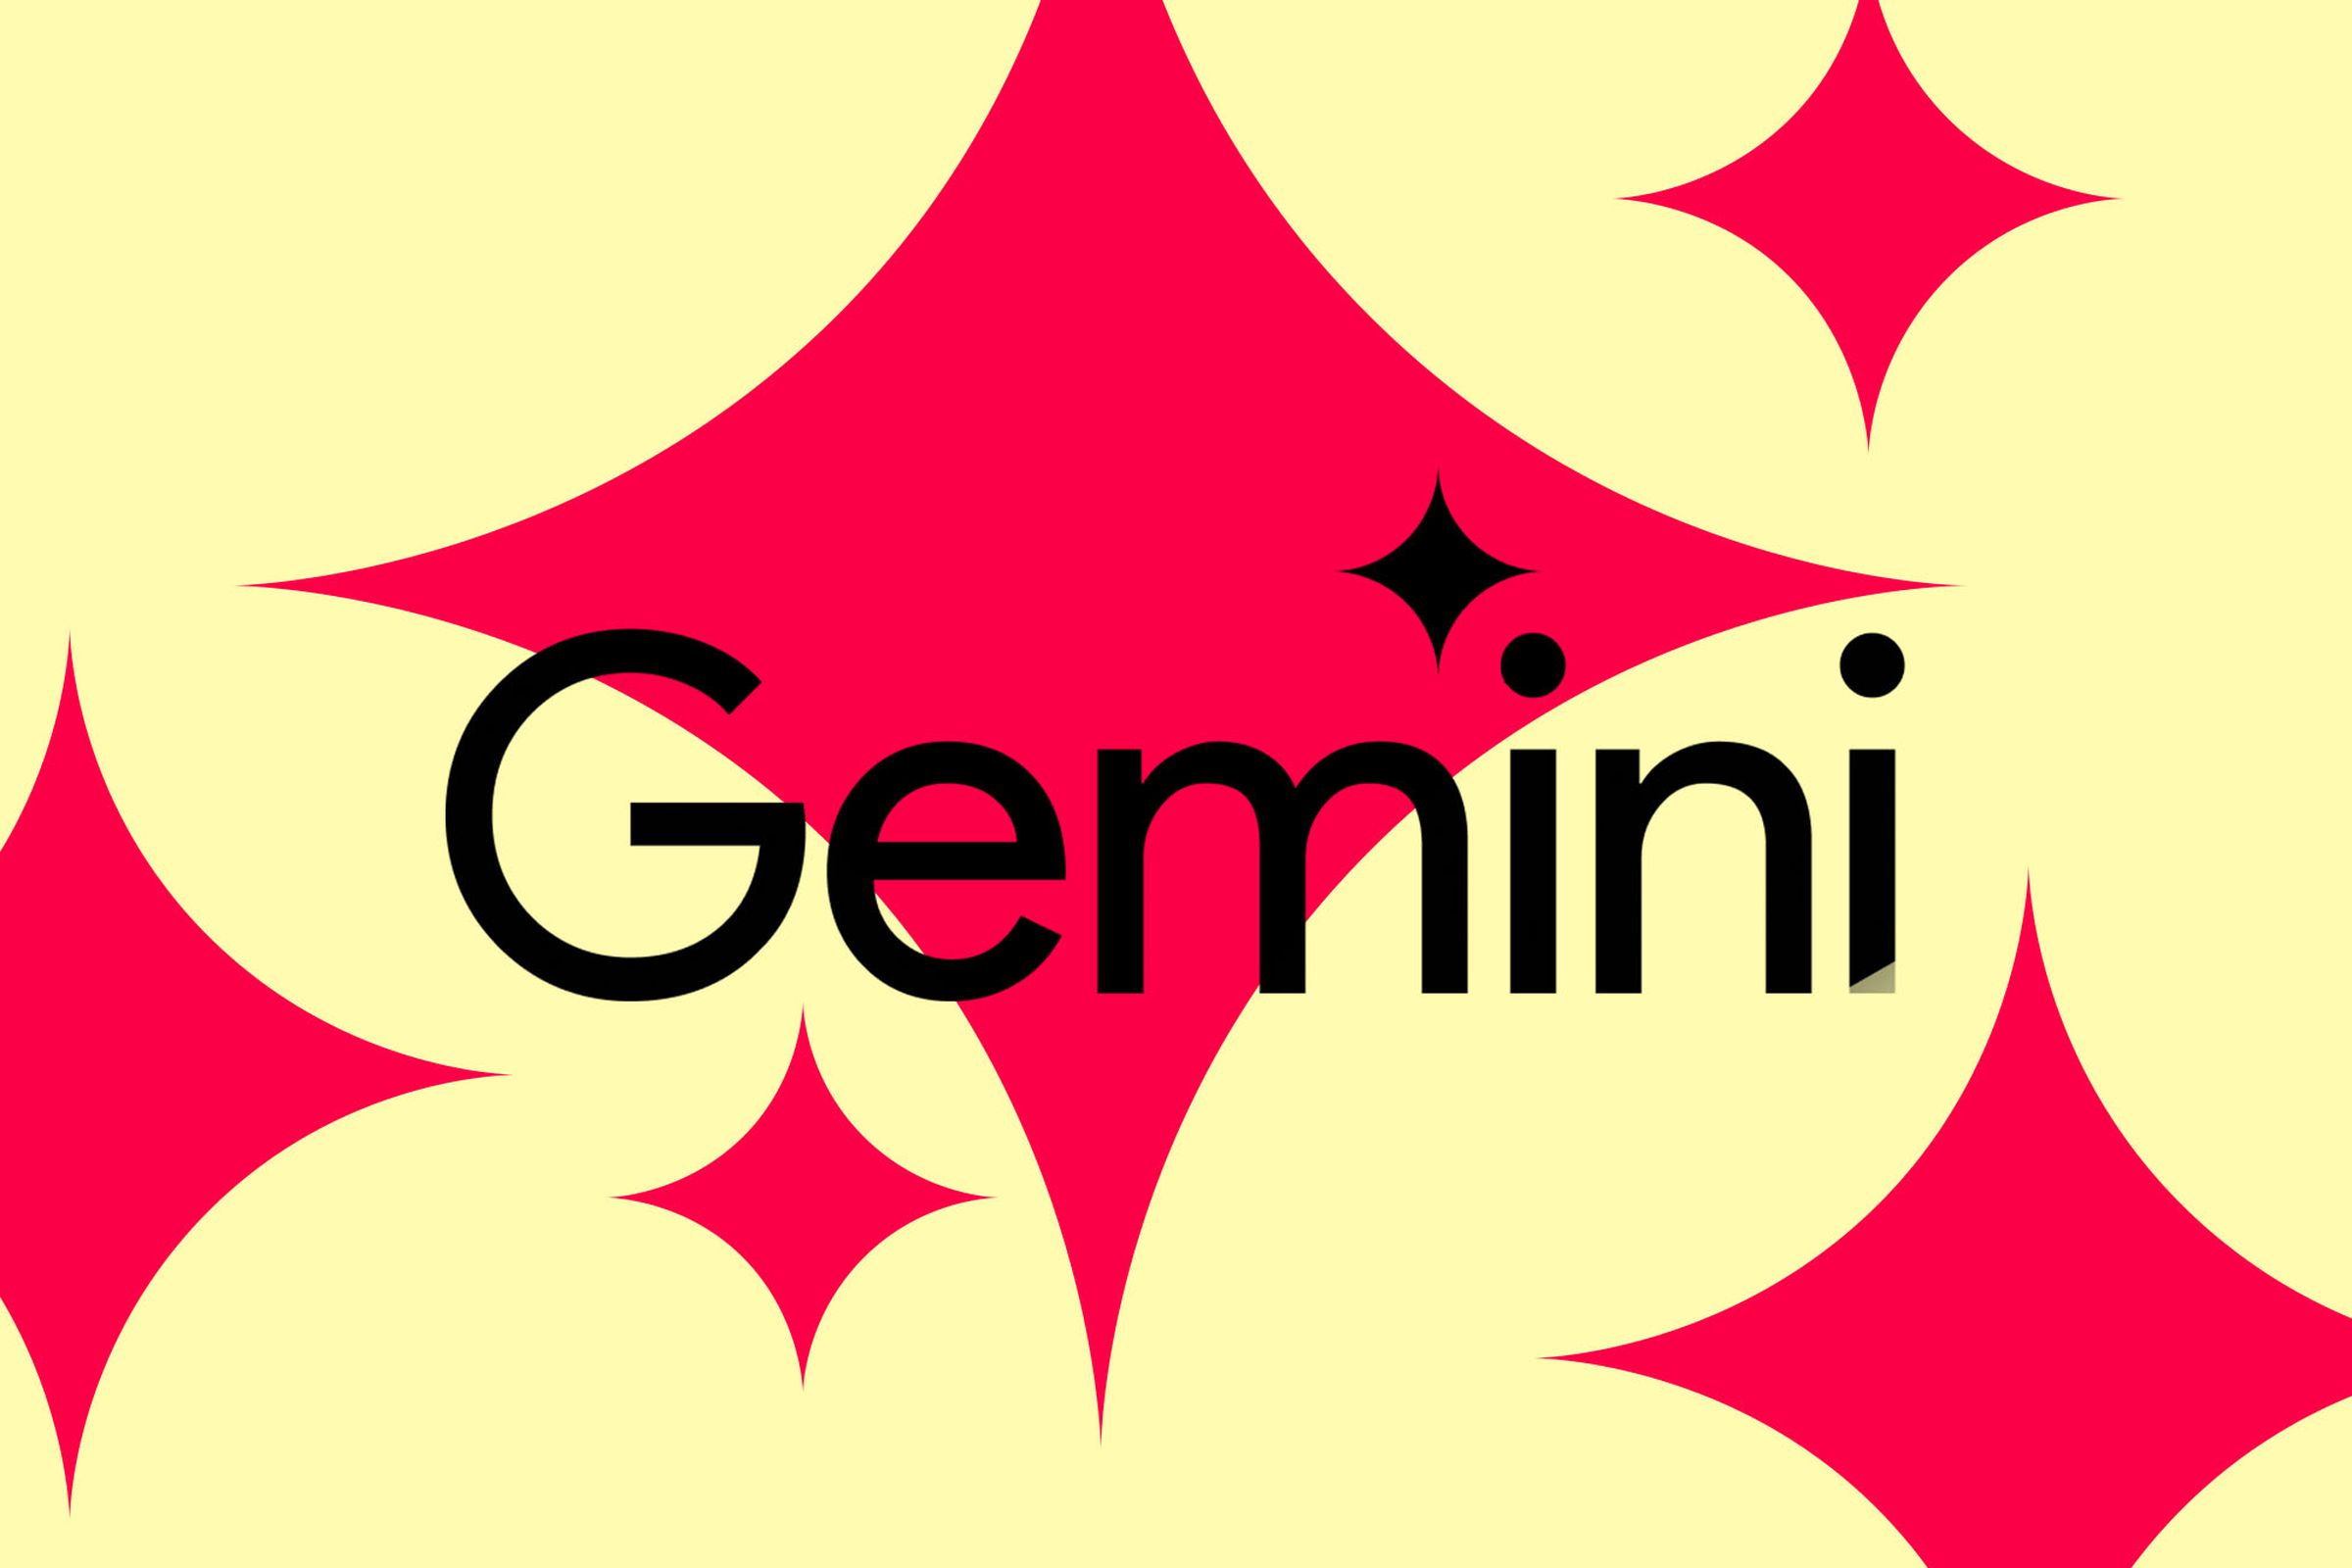 Vector illustration of the Google Gemini logo.